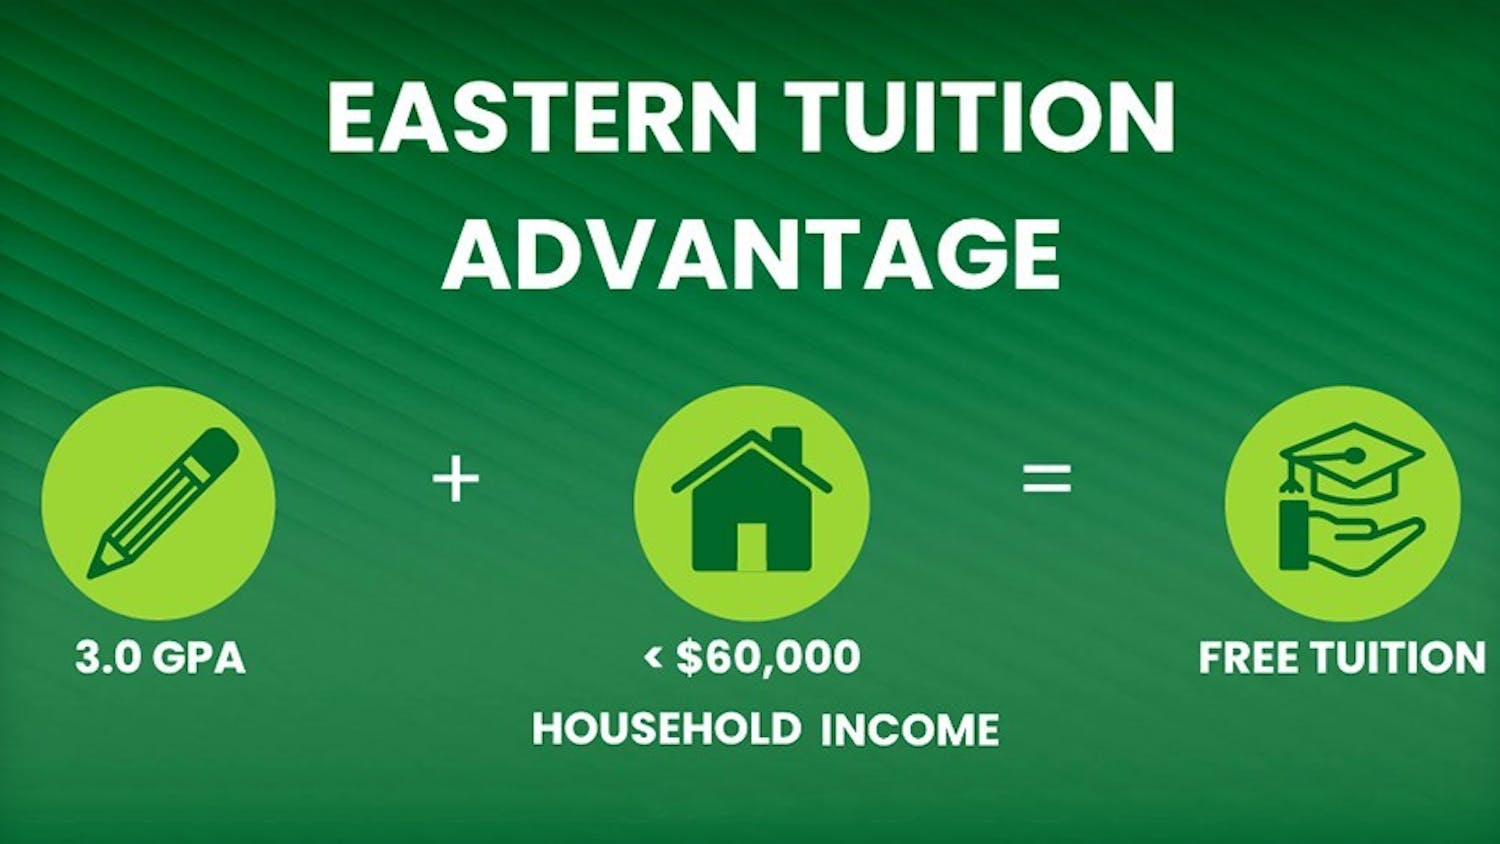 Eastern Tuition Advantage.jpg